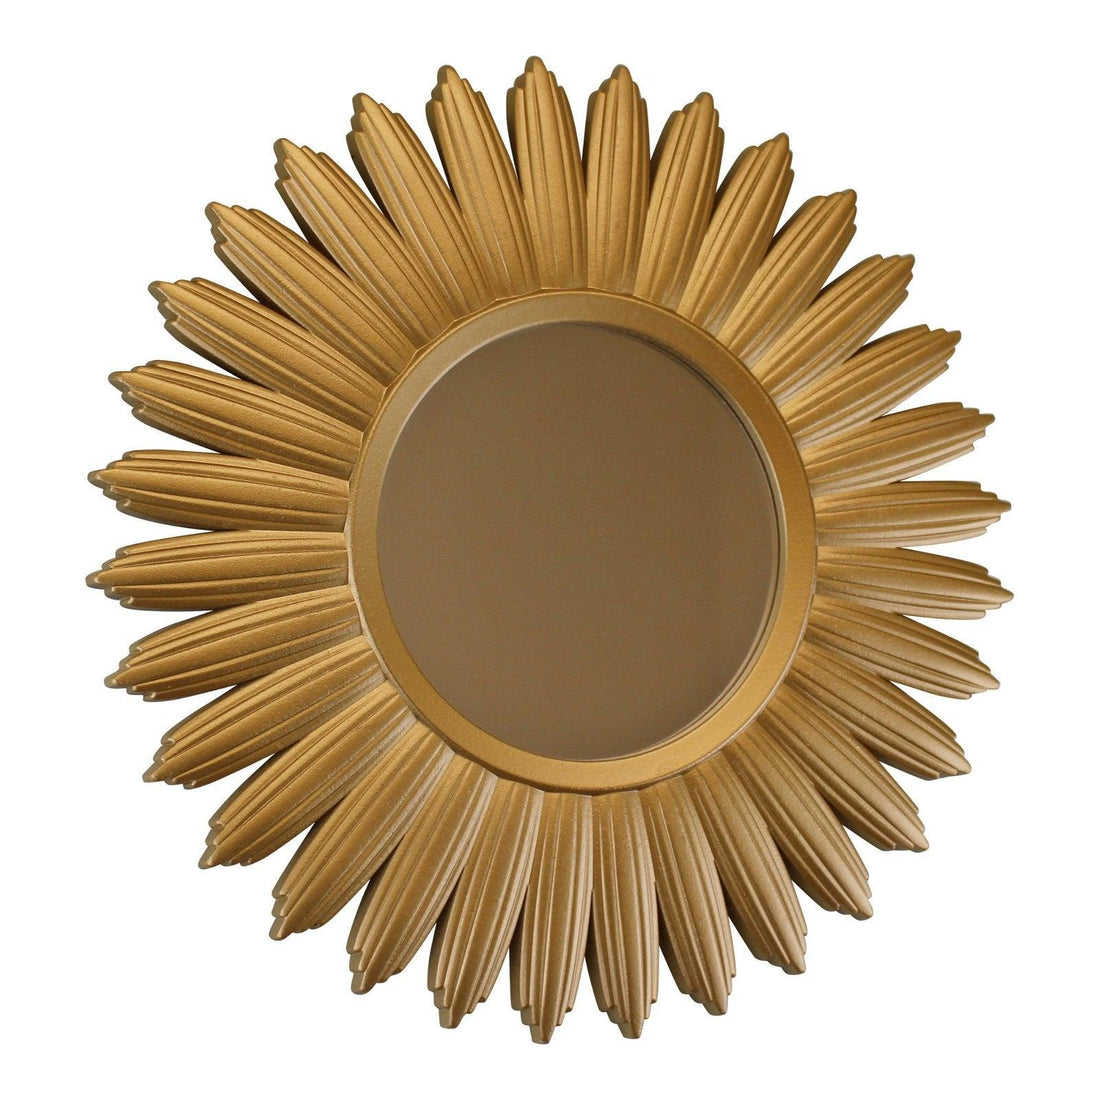 Large Gold Sunburst Mirror - £44.99 - Mirrors 